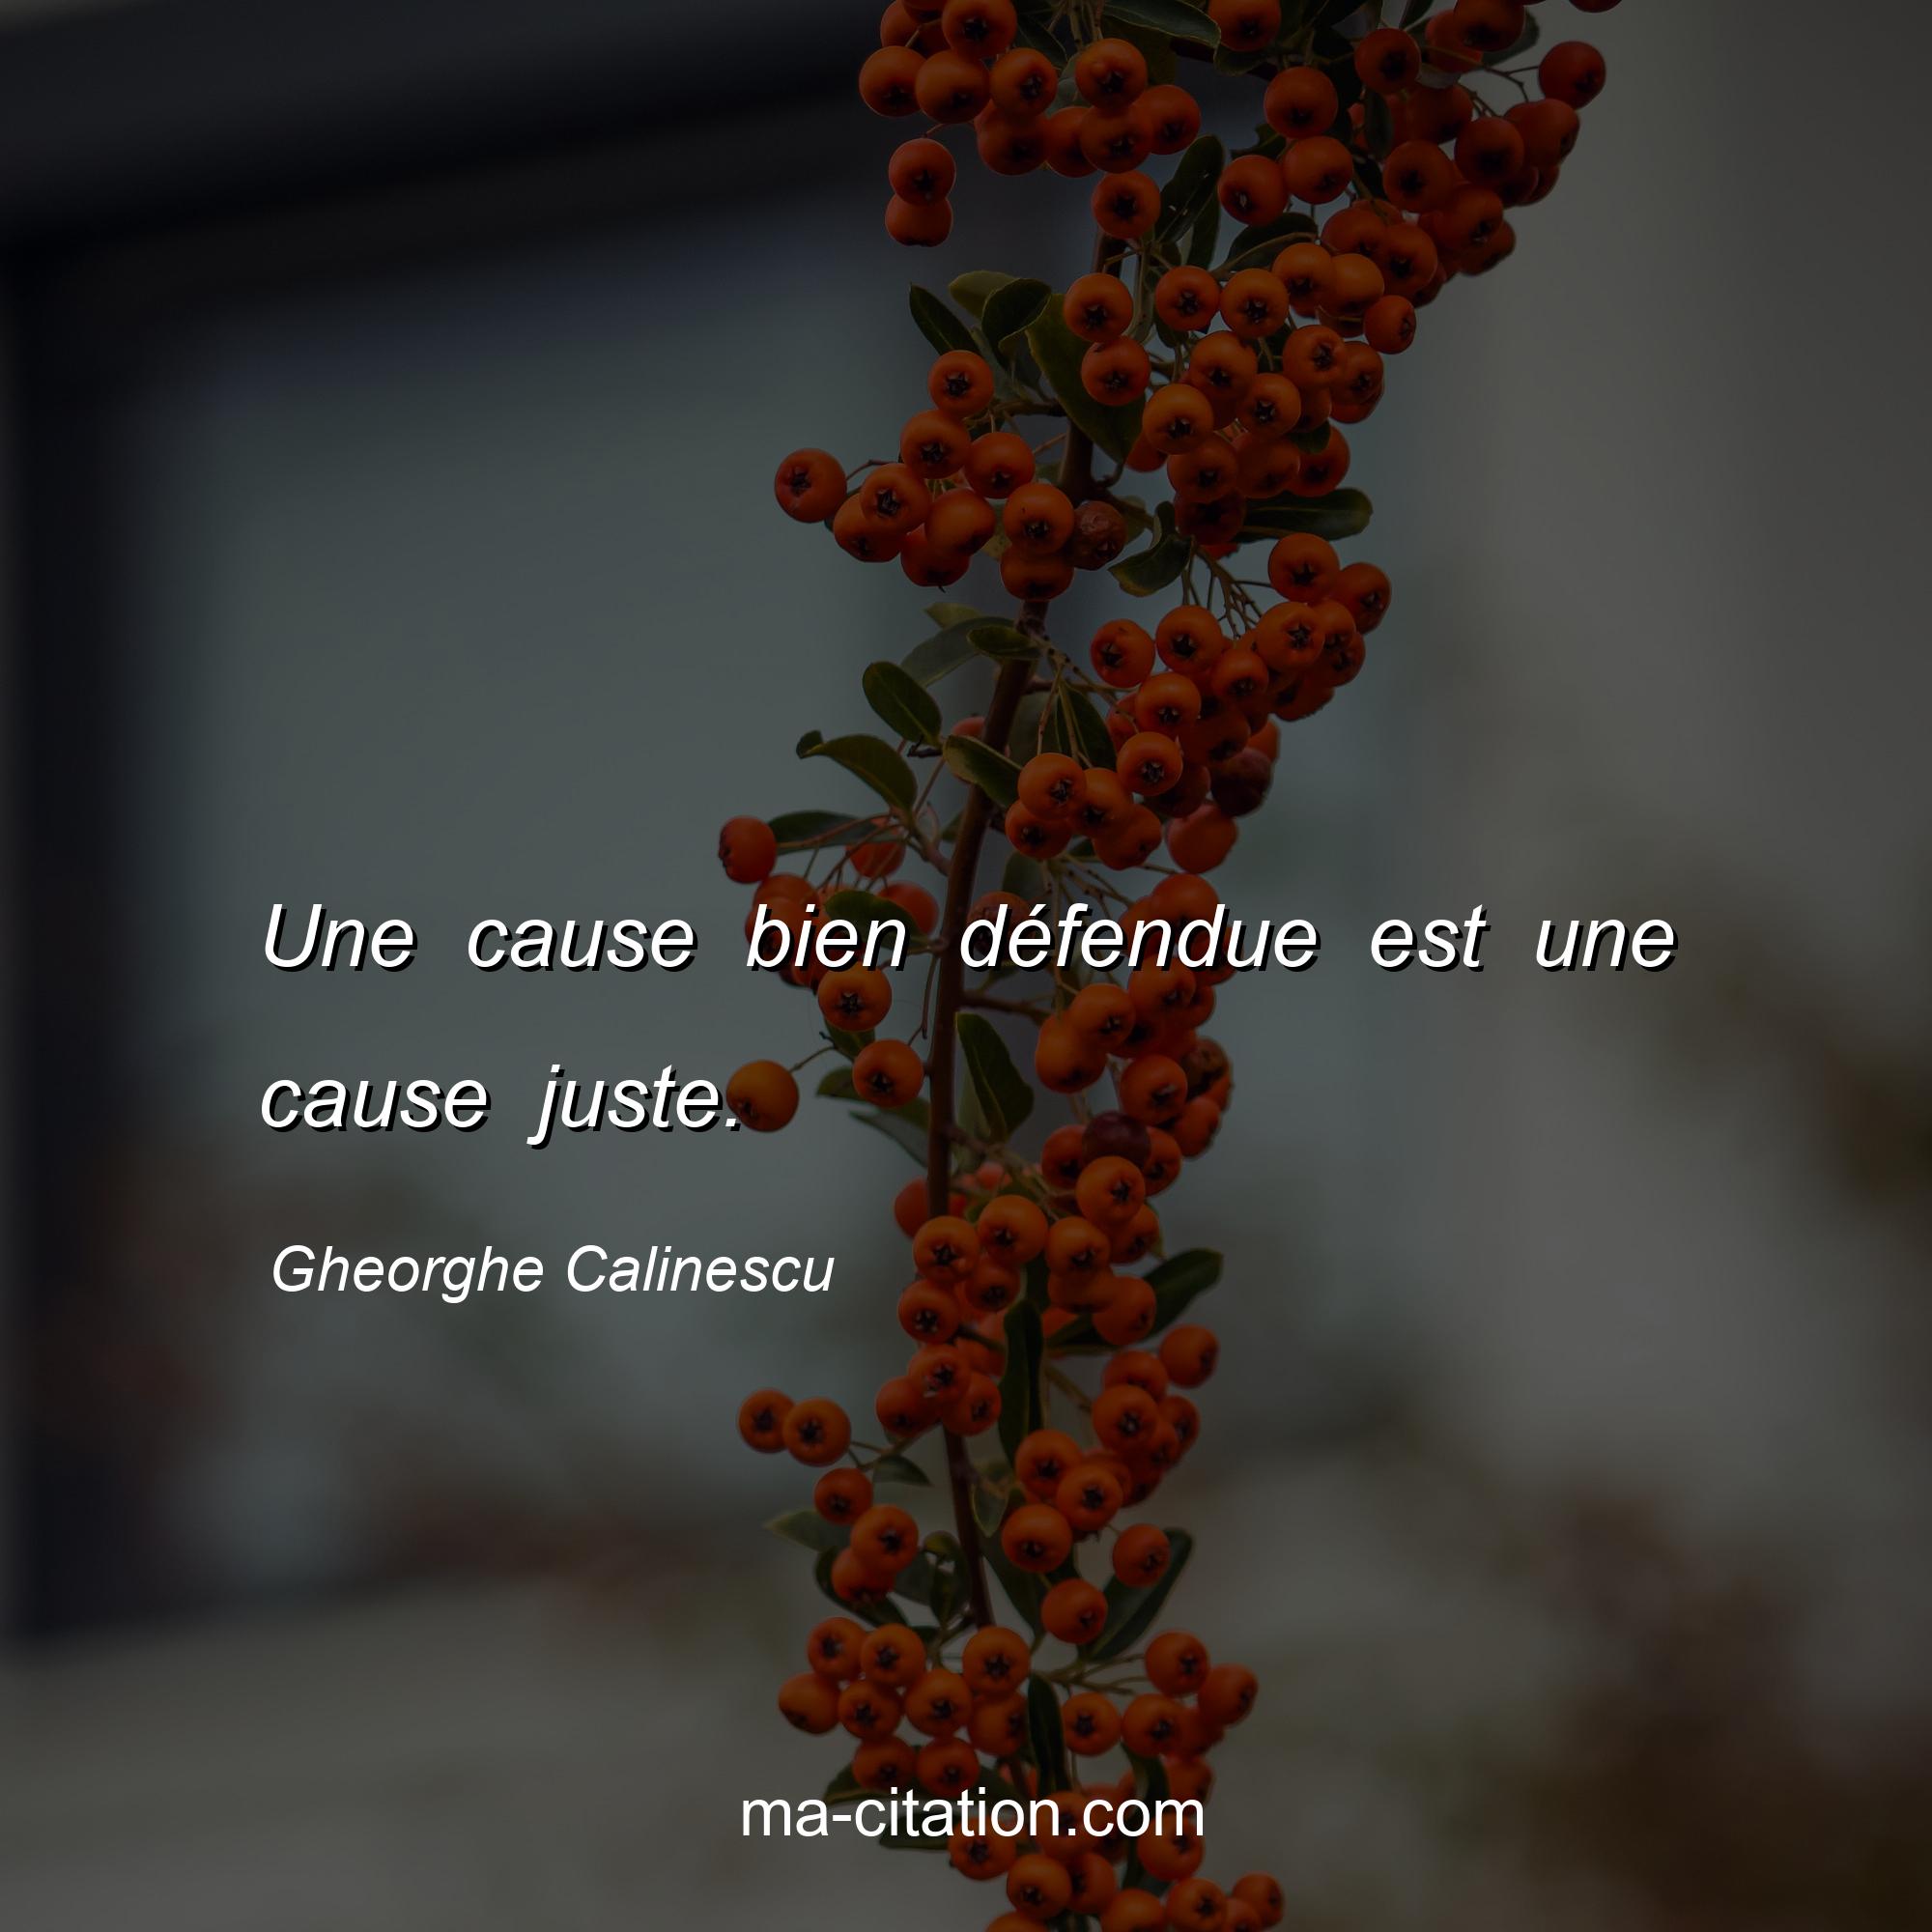 Gheorghe Calinescu : Une cause bien défendue est une cause juste.